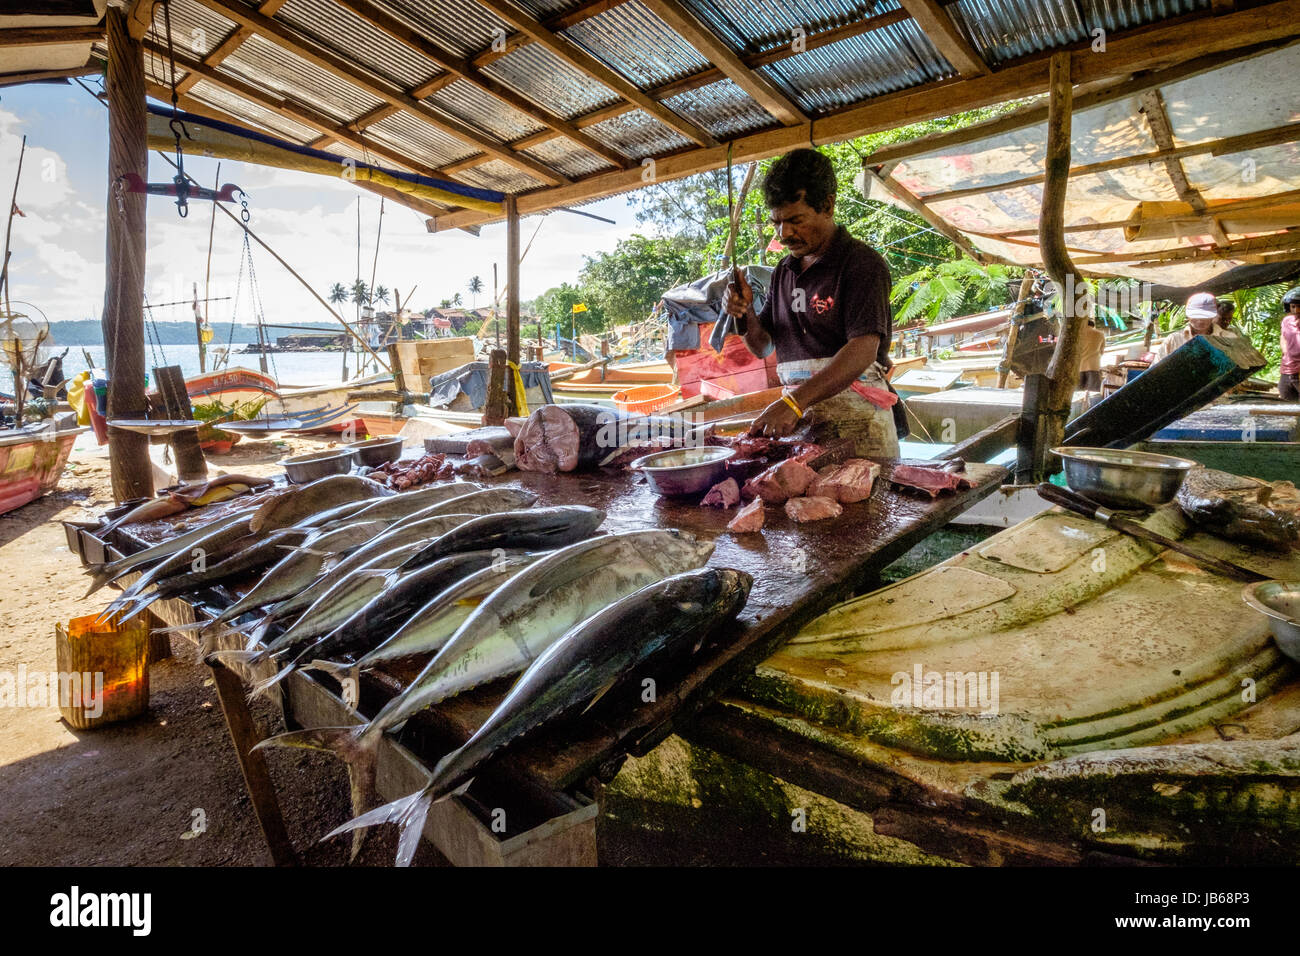 Fisherman preparing catch on his market stall, Galle, Sri Lanka Stock Photo